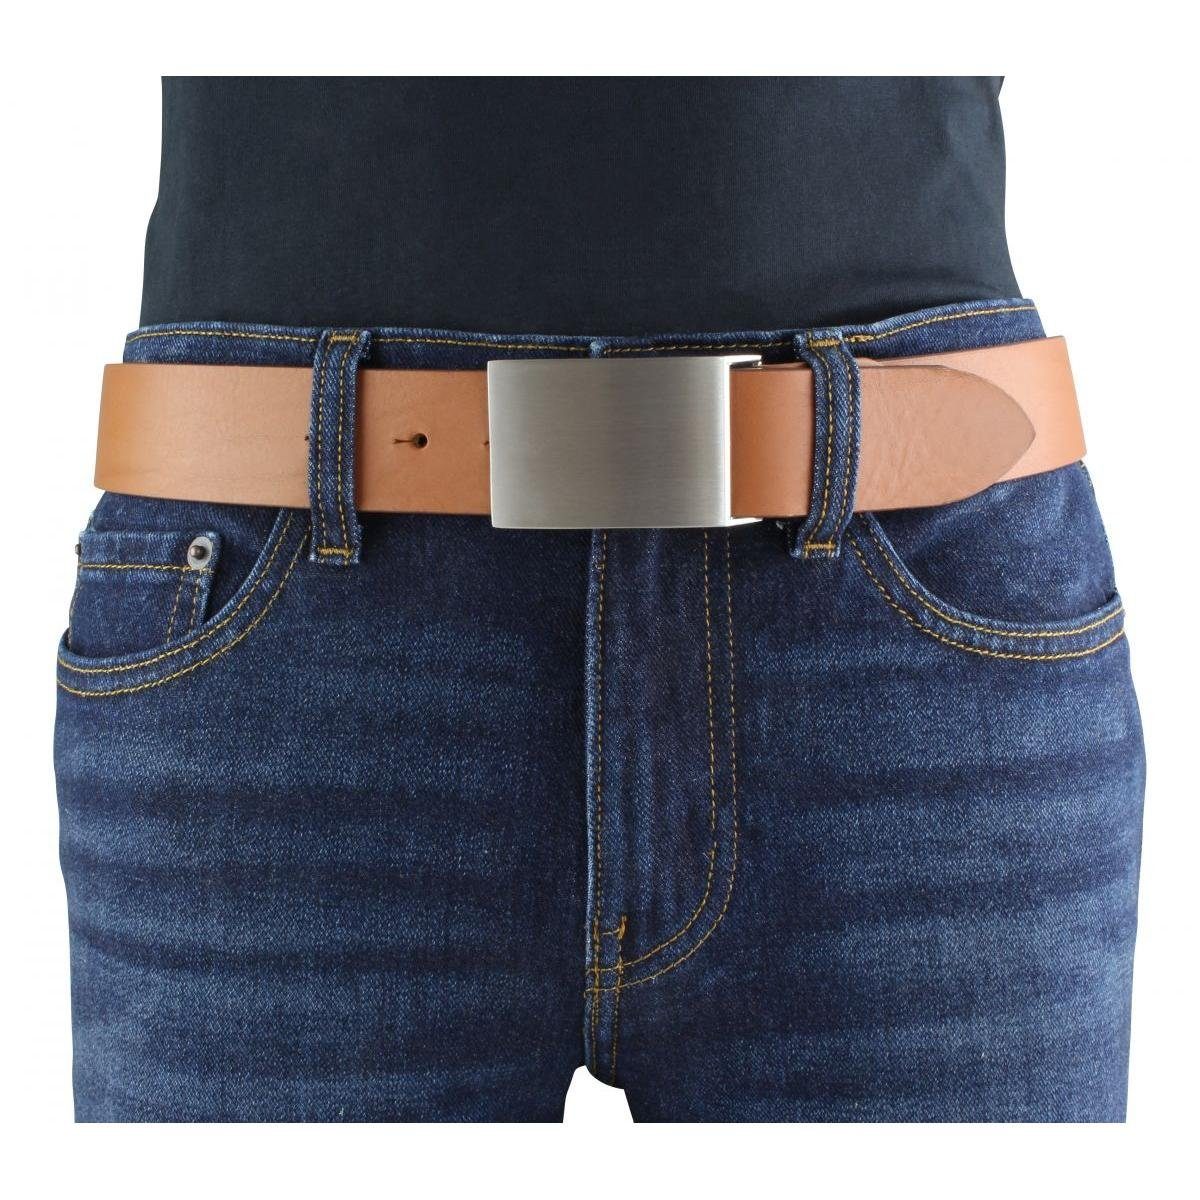 Braun, Vollrindleder Jeans Jeans-Gürtel Gürtel BELTINGER für 4,0 aus - Ledergürtel 40mm - cm Silber Herren